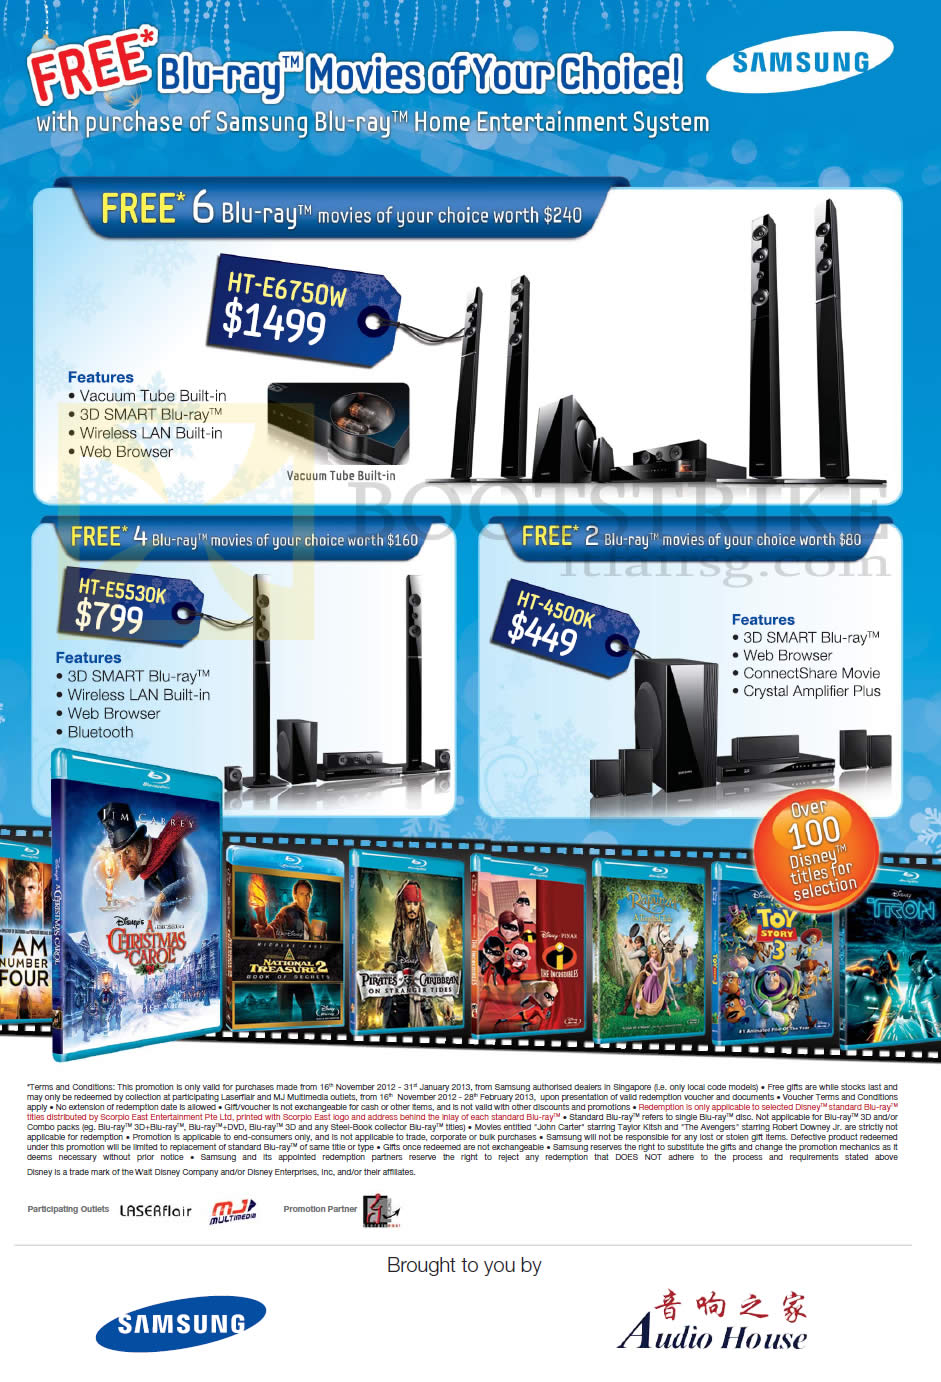 SITEX 2012 price list image brochure of Samsung Audio House Home Theatre System HT-E6750W, HT-E5530K, HT-4500K